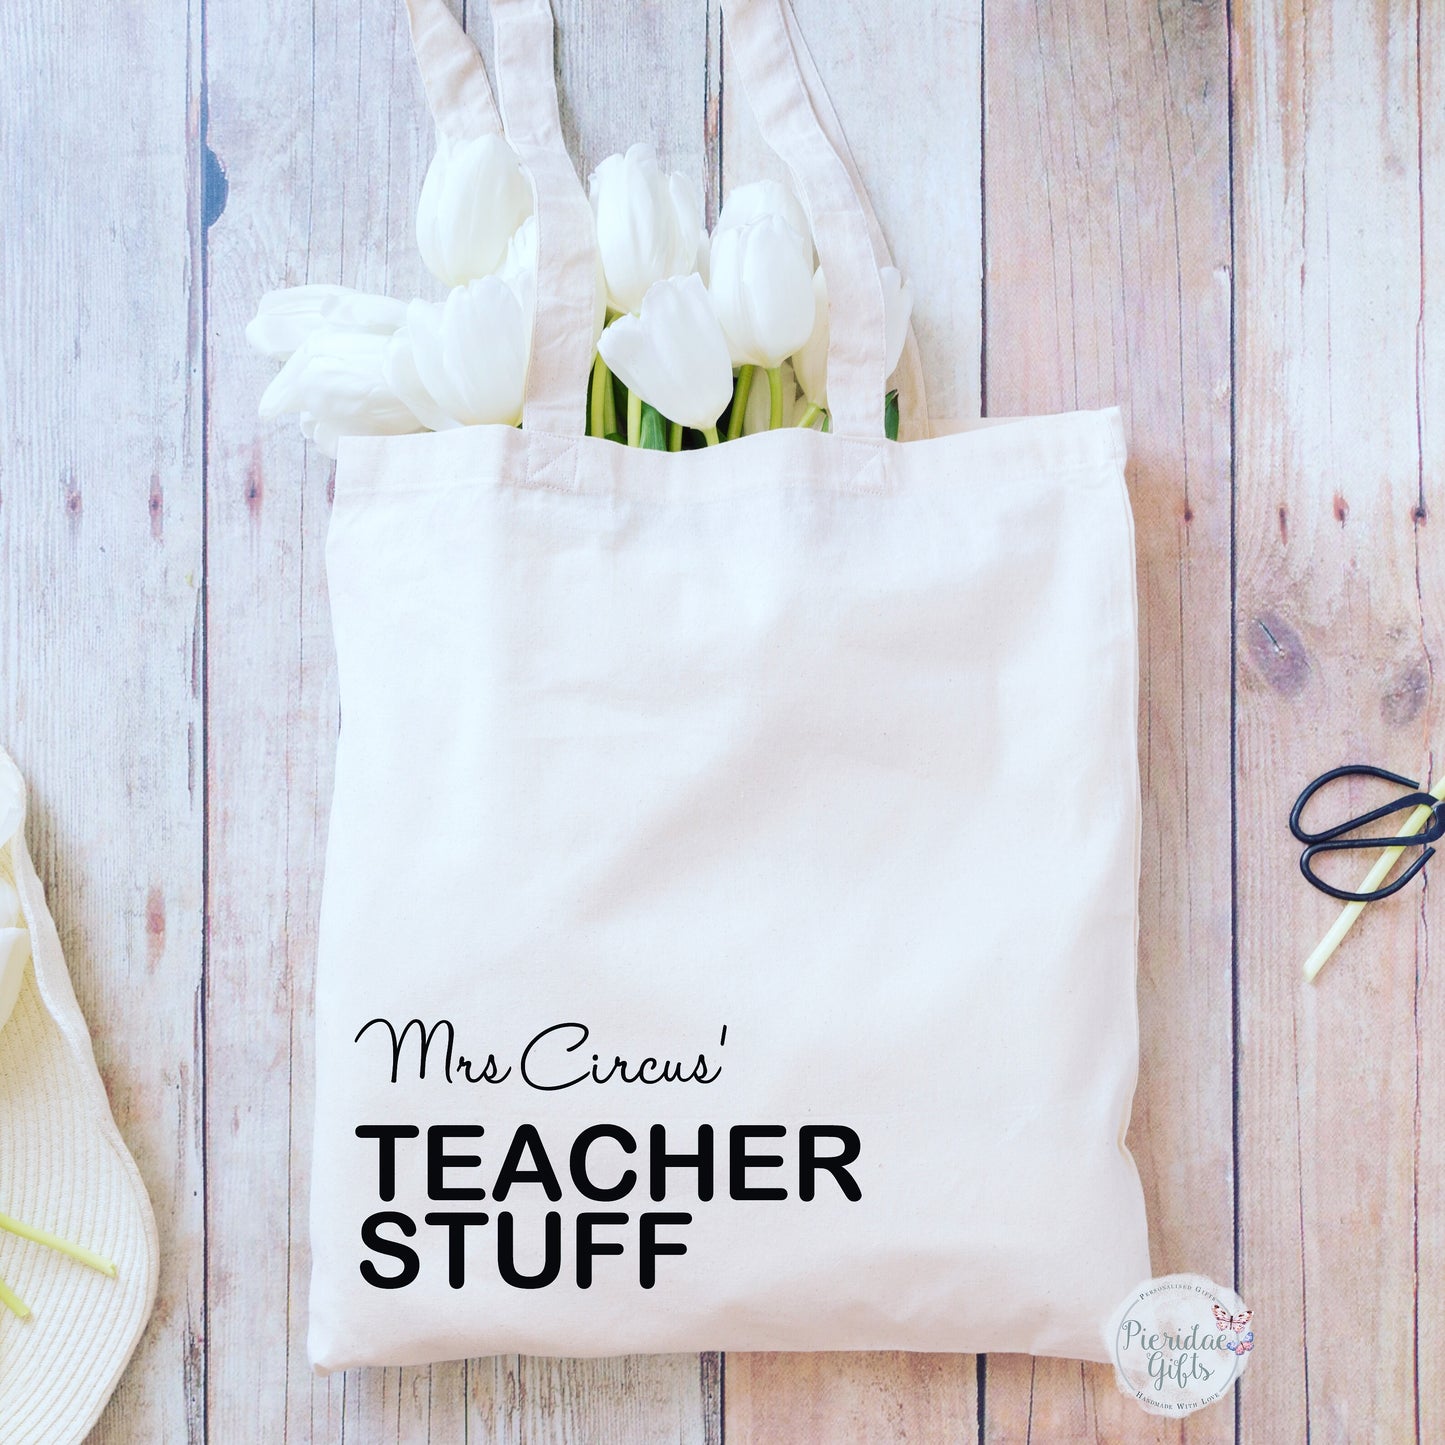 Personalised Teacher Stuff Tote Bag